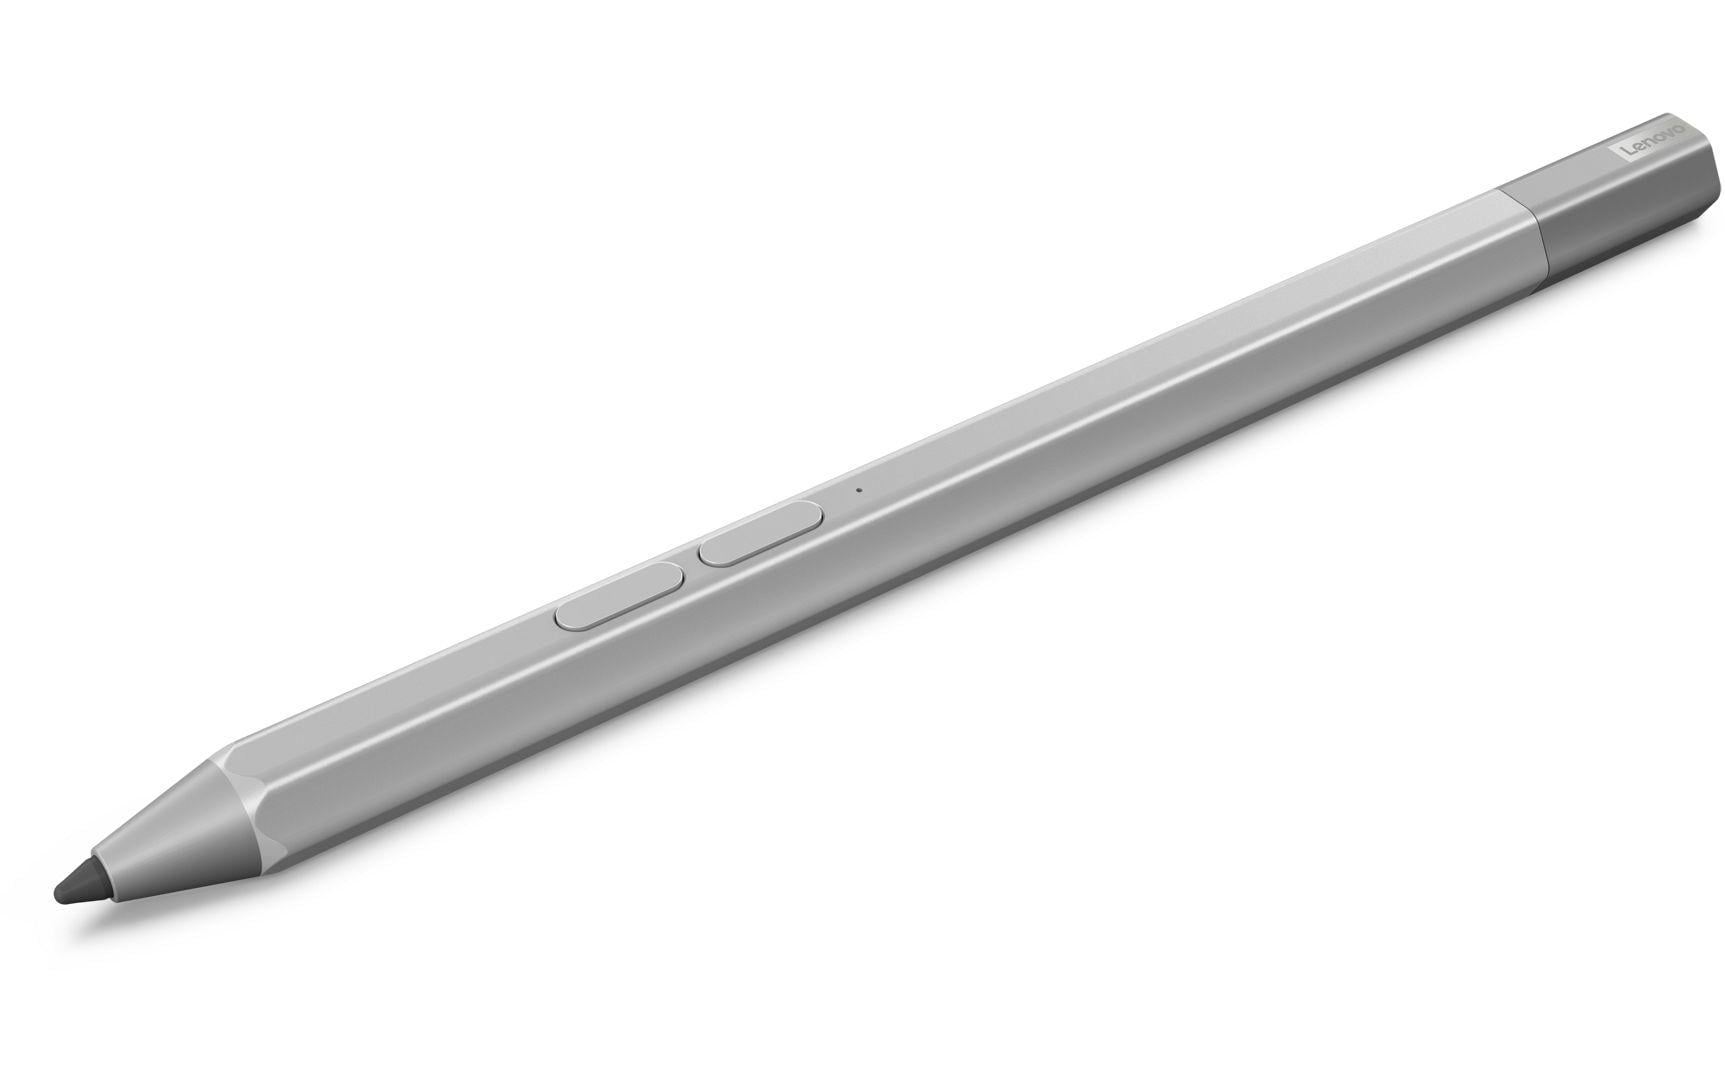 Lenovo Eingabestift Precision Pen 2 (Tablet) Silber